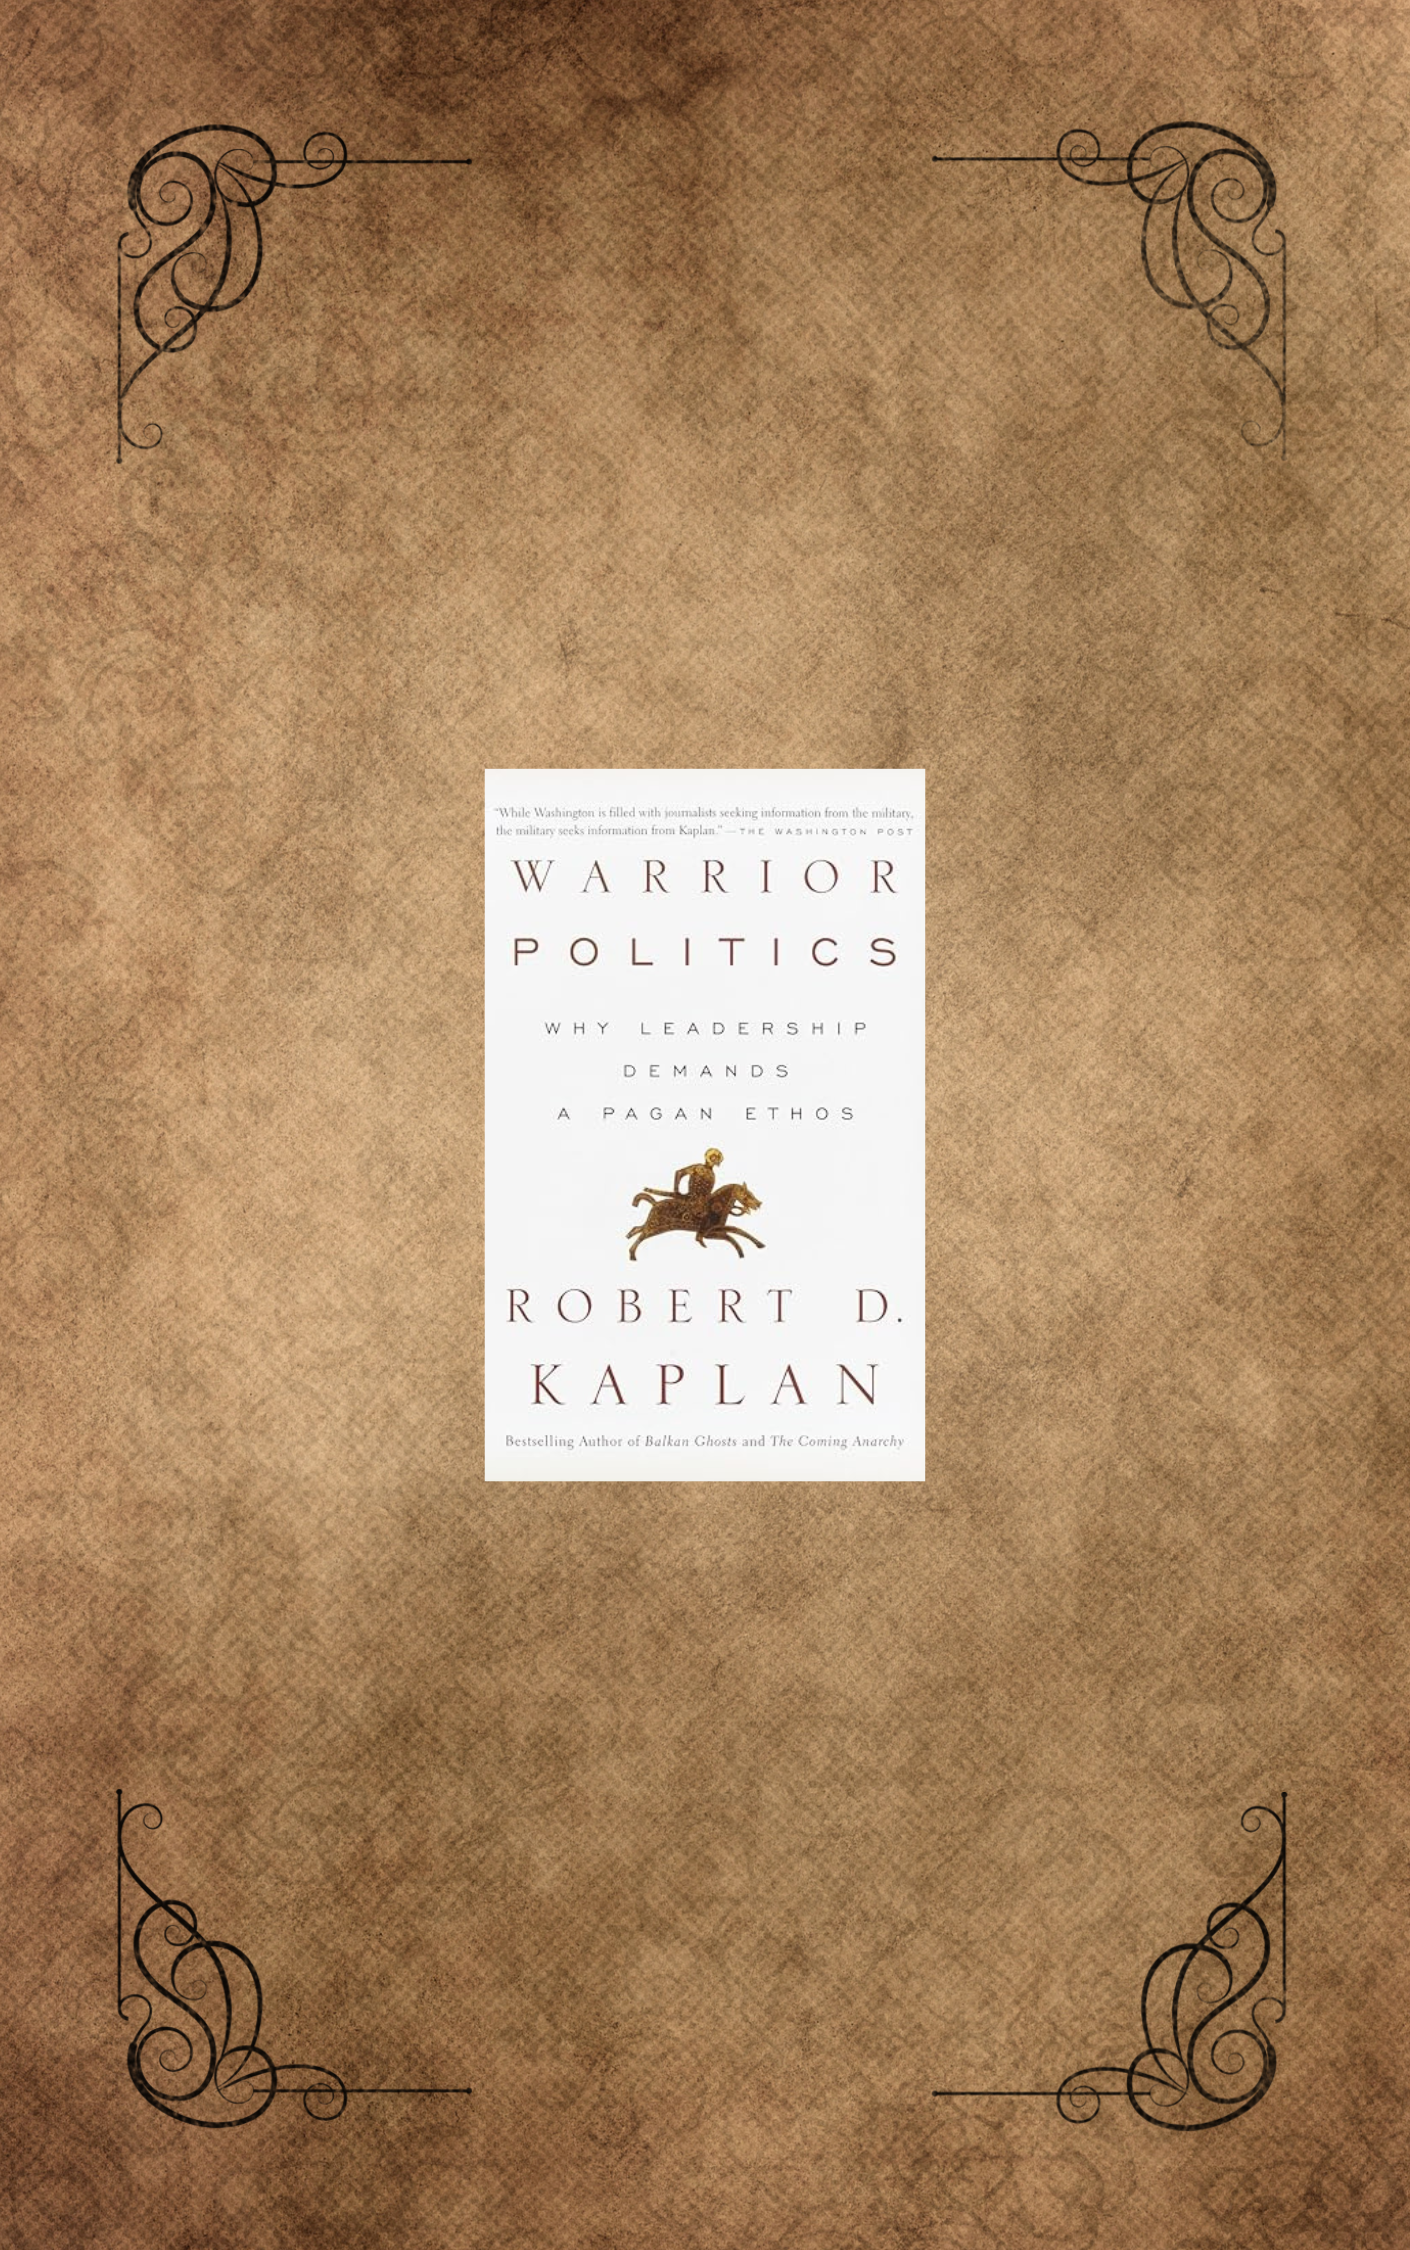 Warrior Politics Book Review